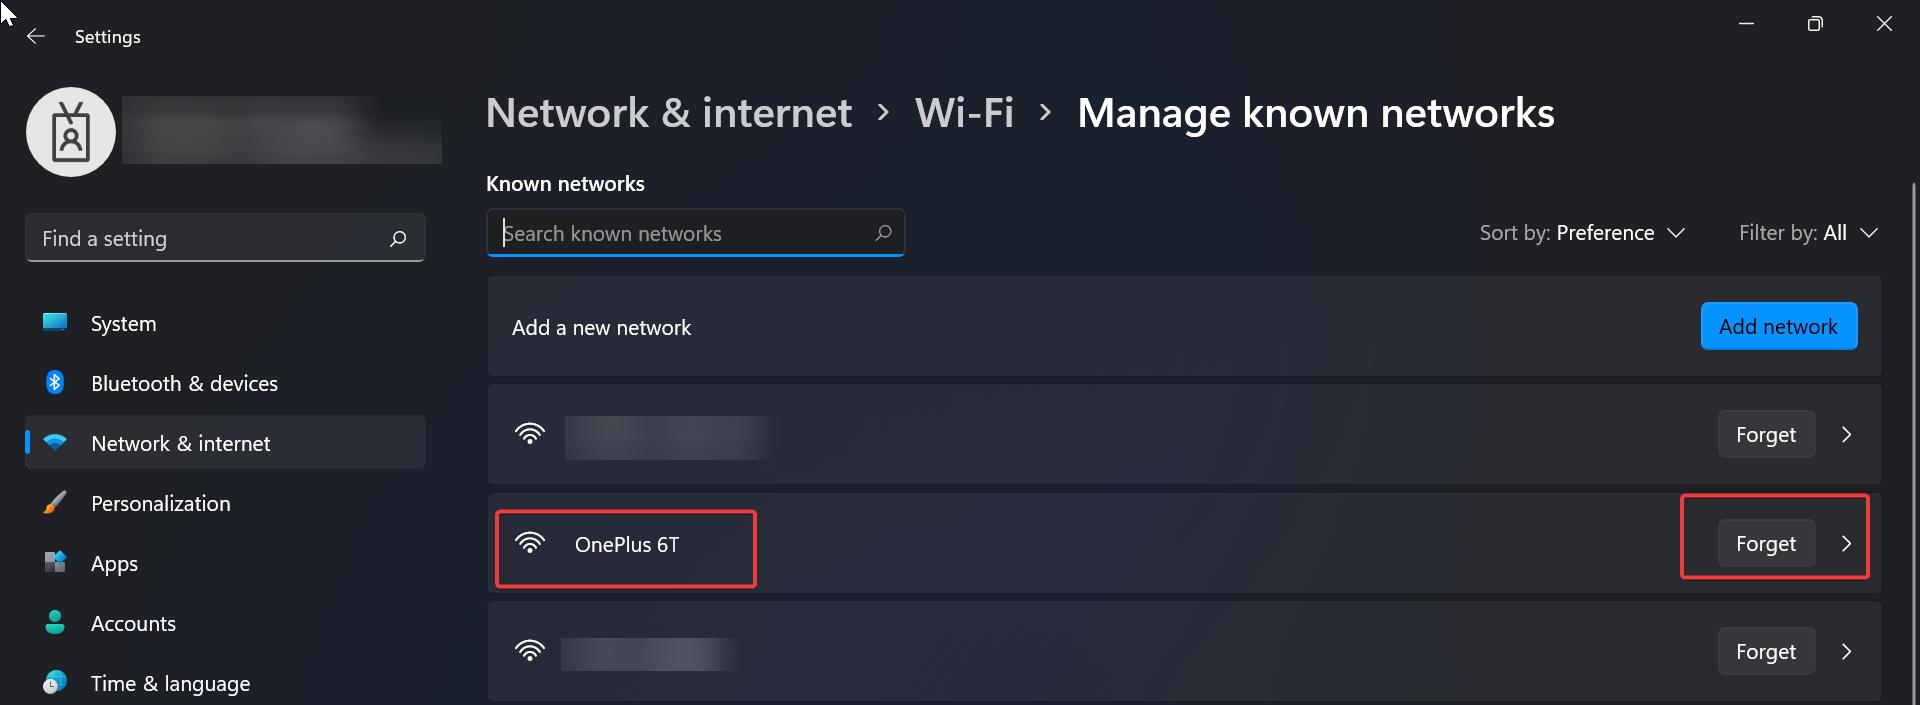 Forget network- Fix Some information changed error